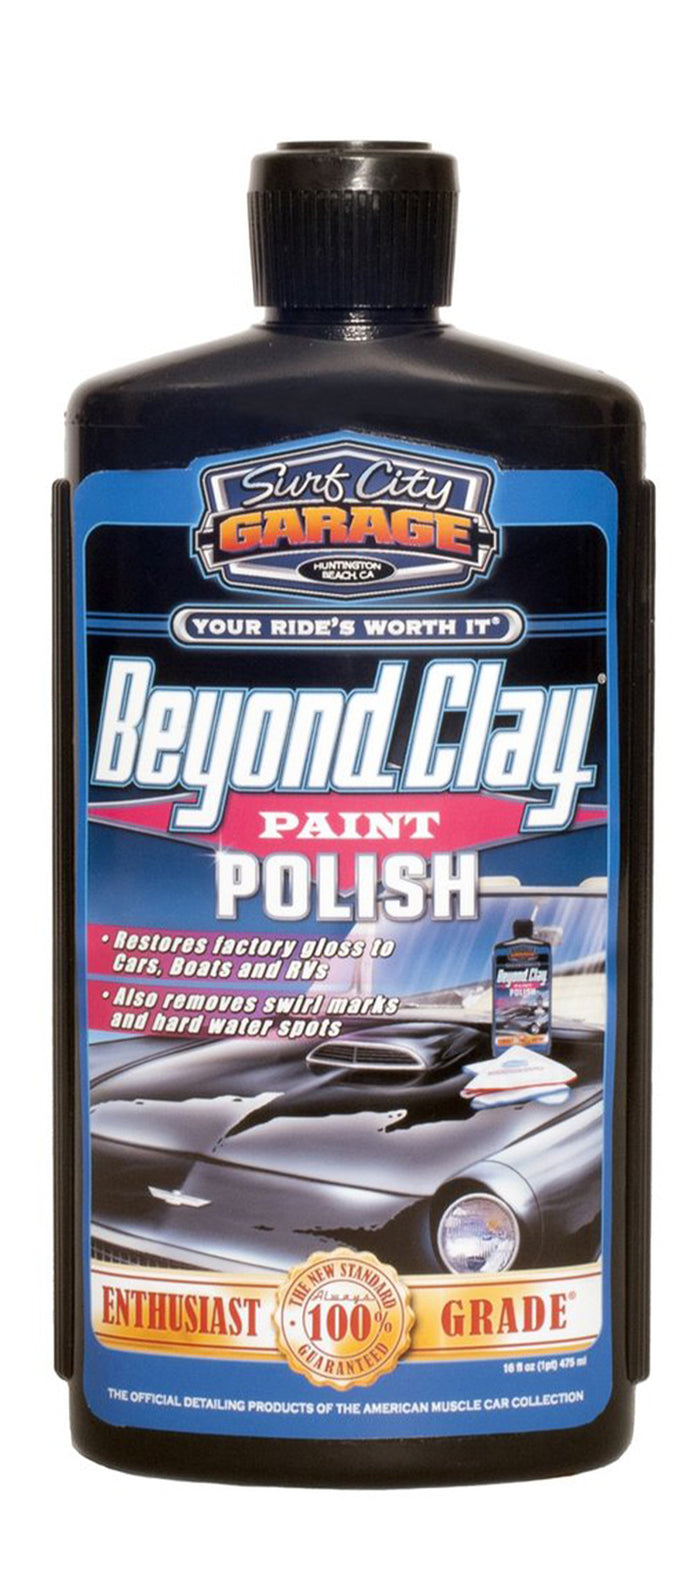 Beyond Clay® Paint Polish